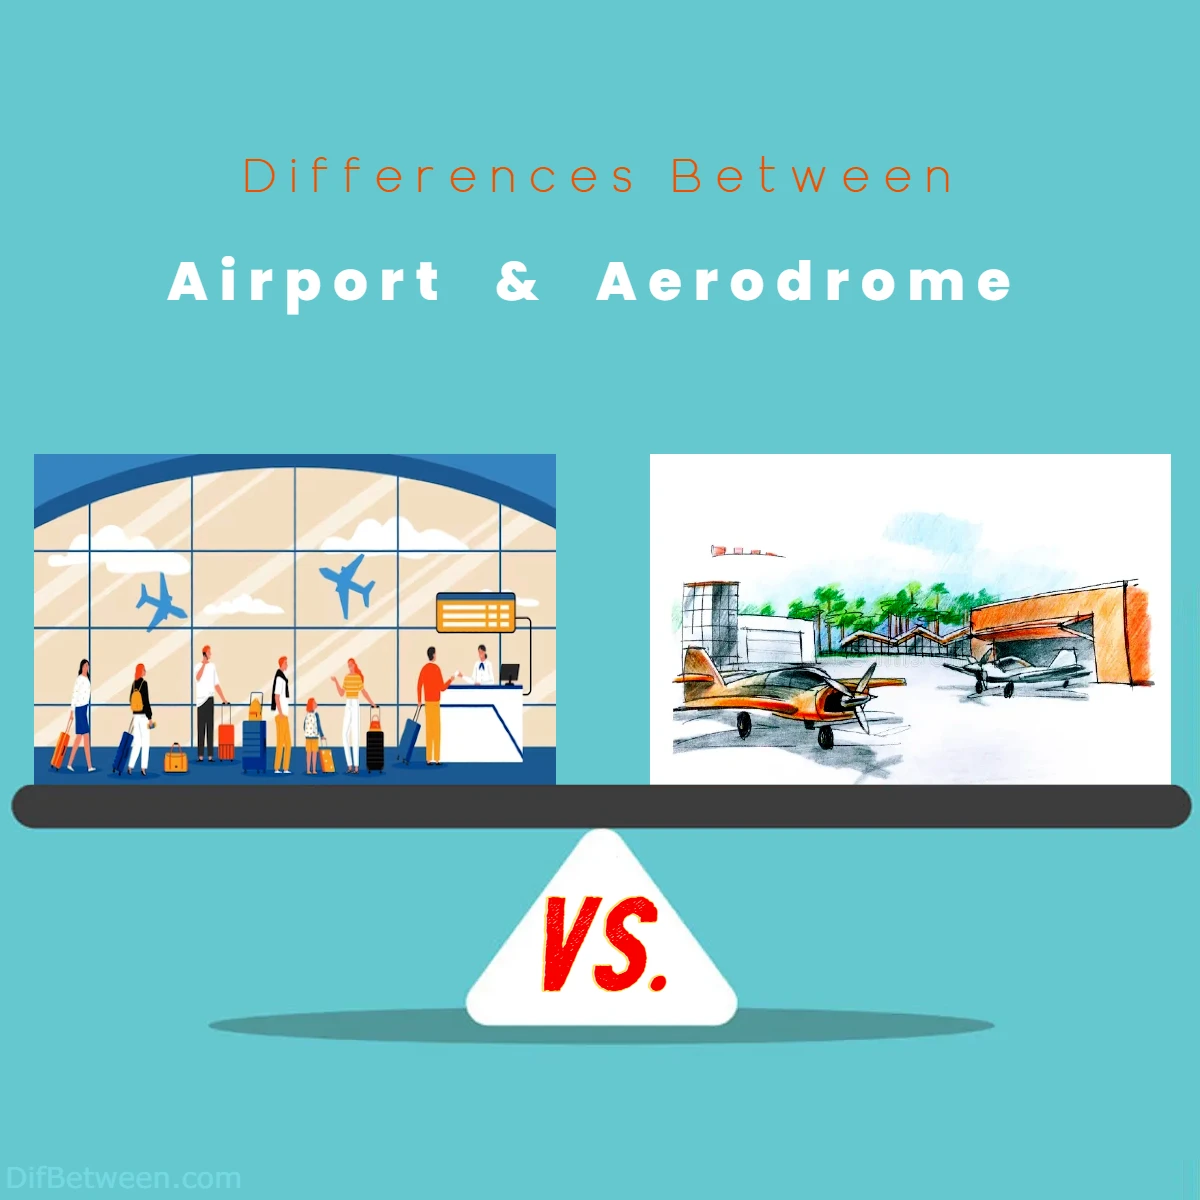 Differences Between Airport vs Aerodrome